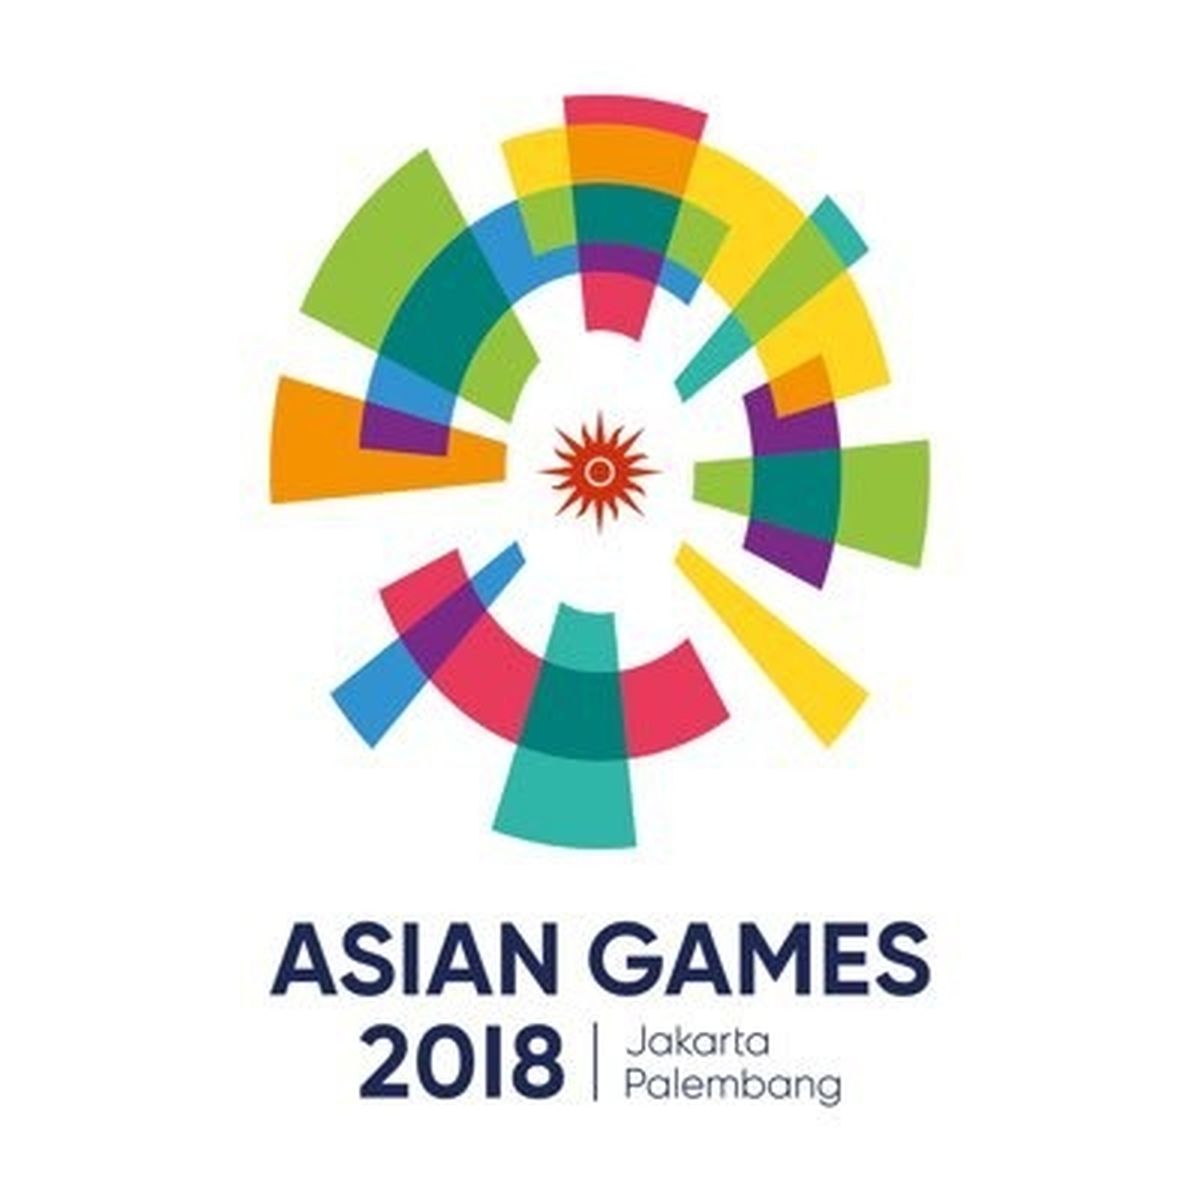 Asian Games venues ‘95% ready’ but potential pitfalls remain